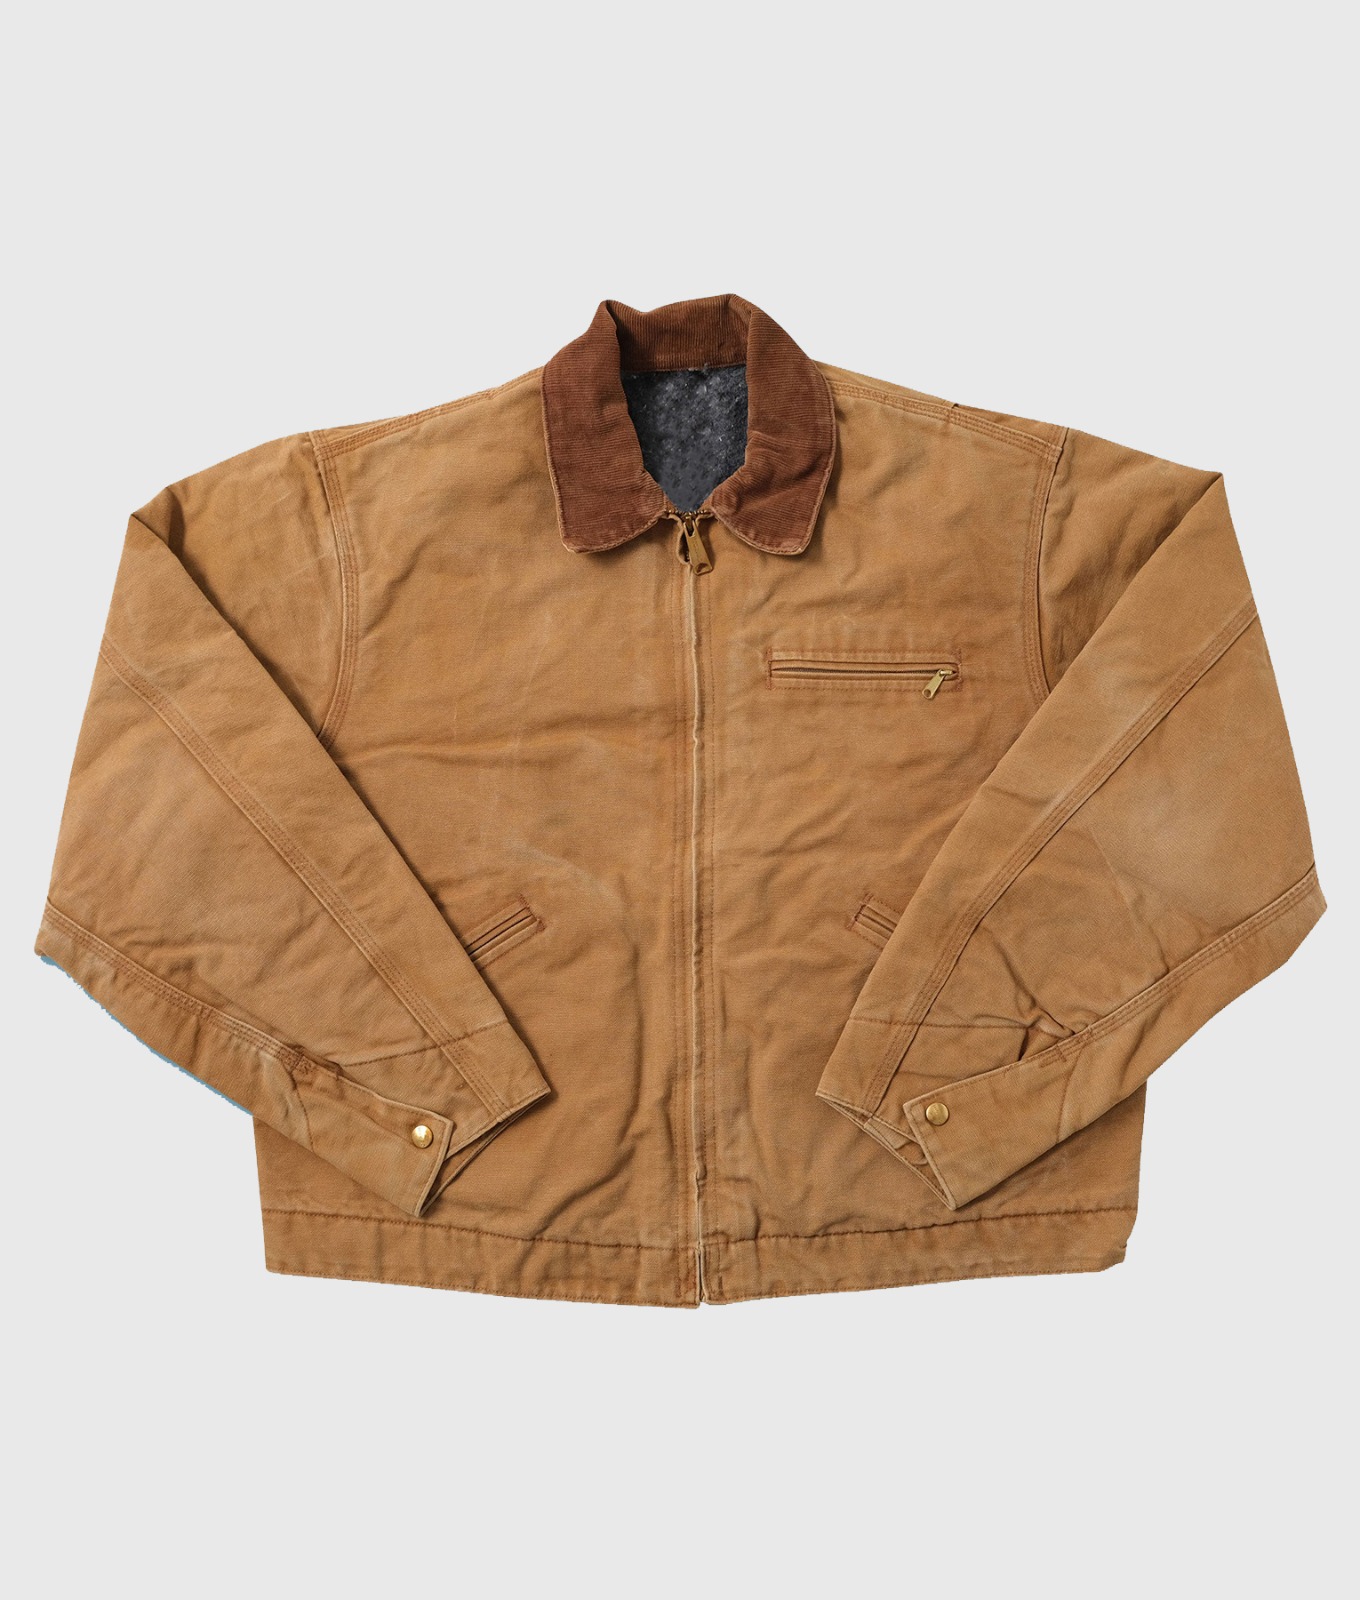 Josh Brolin Outer Range Cotton Jacket (5)